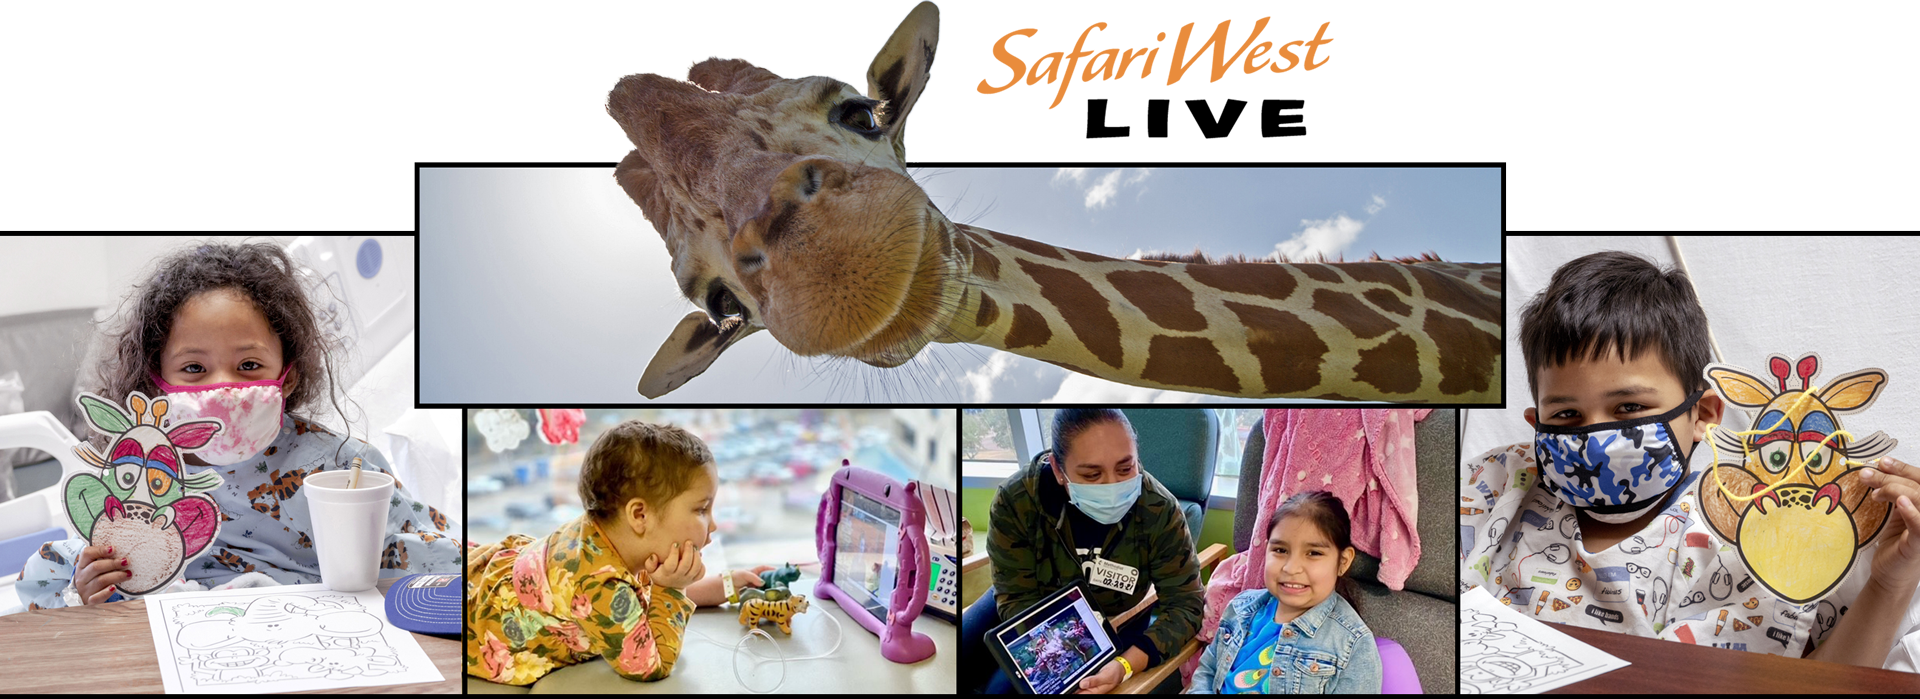 Safari West Live